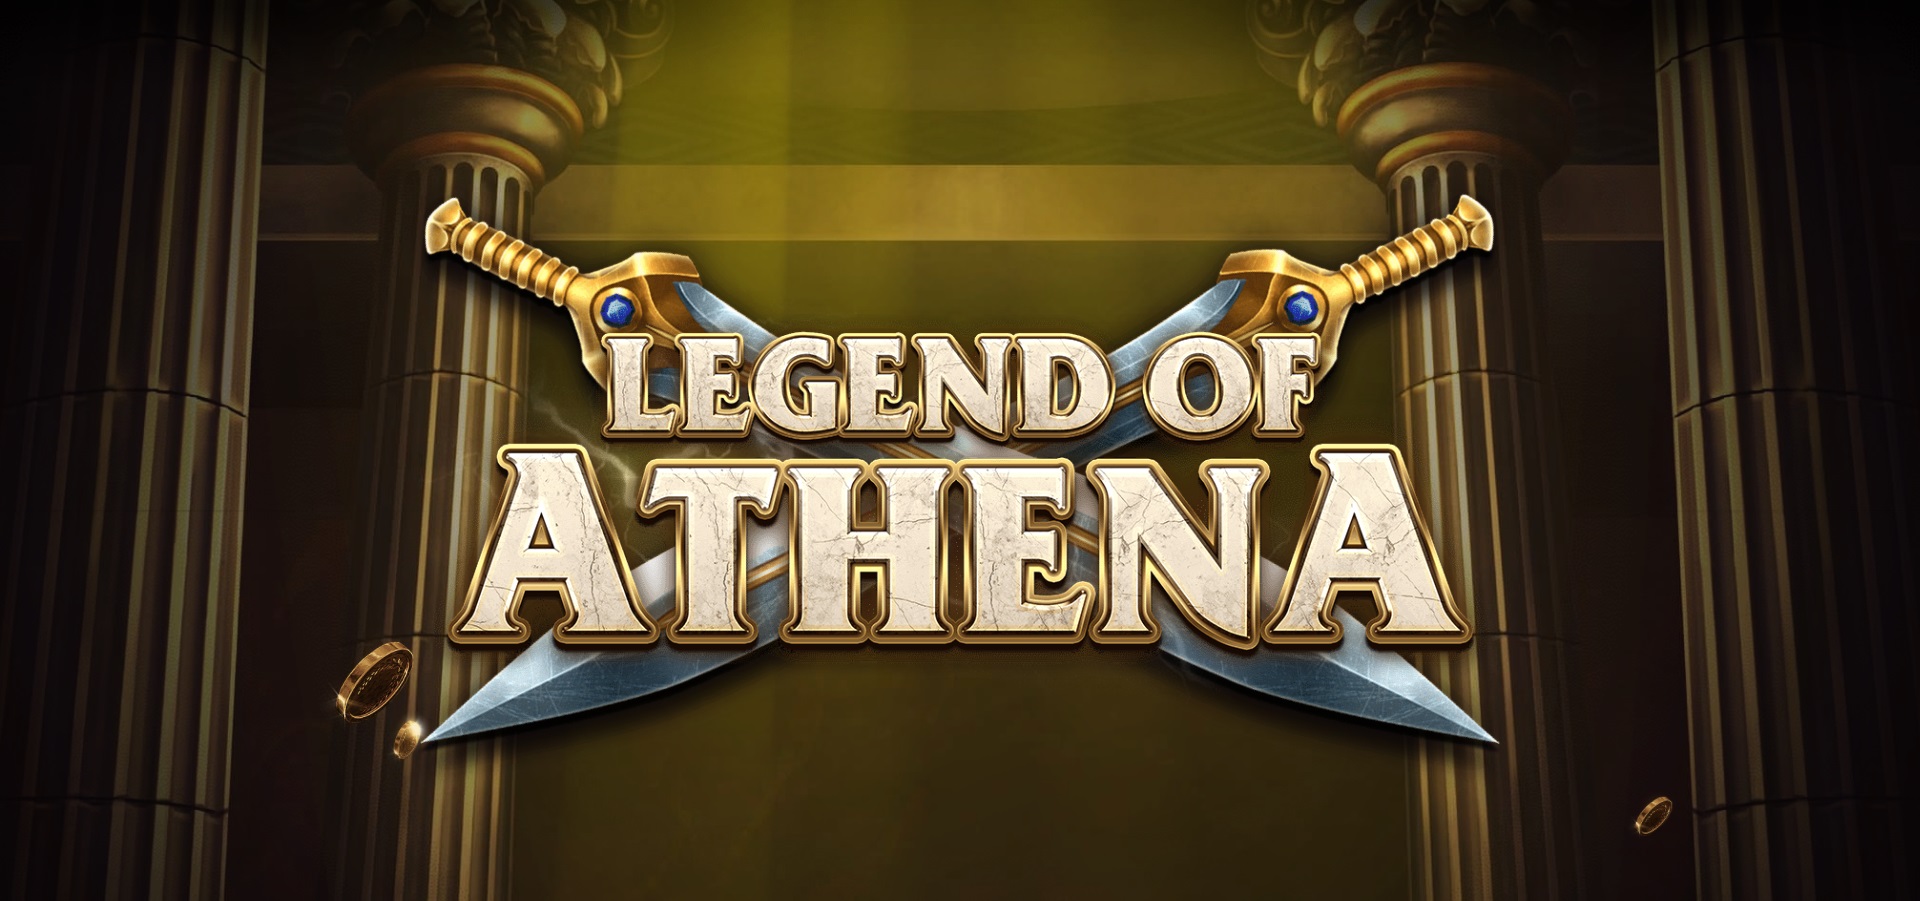 Legend of Athena slot